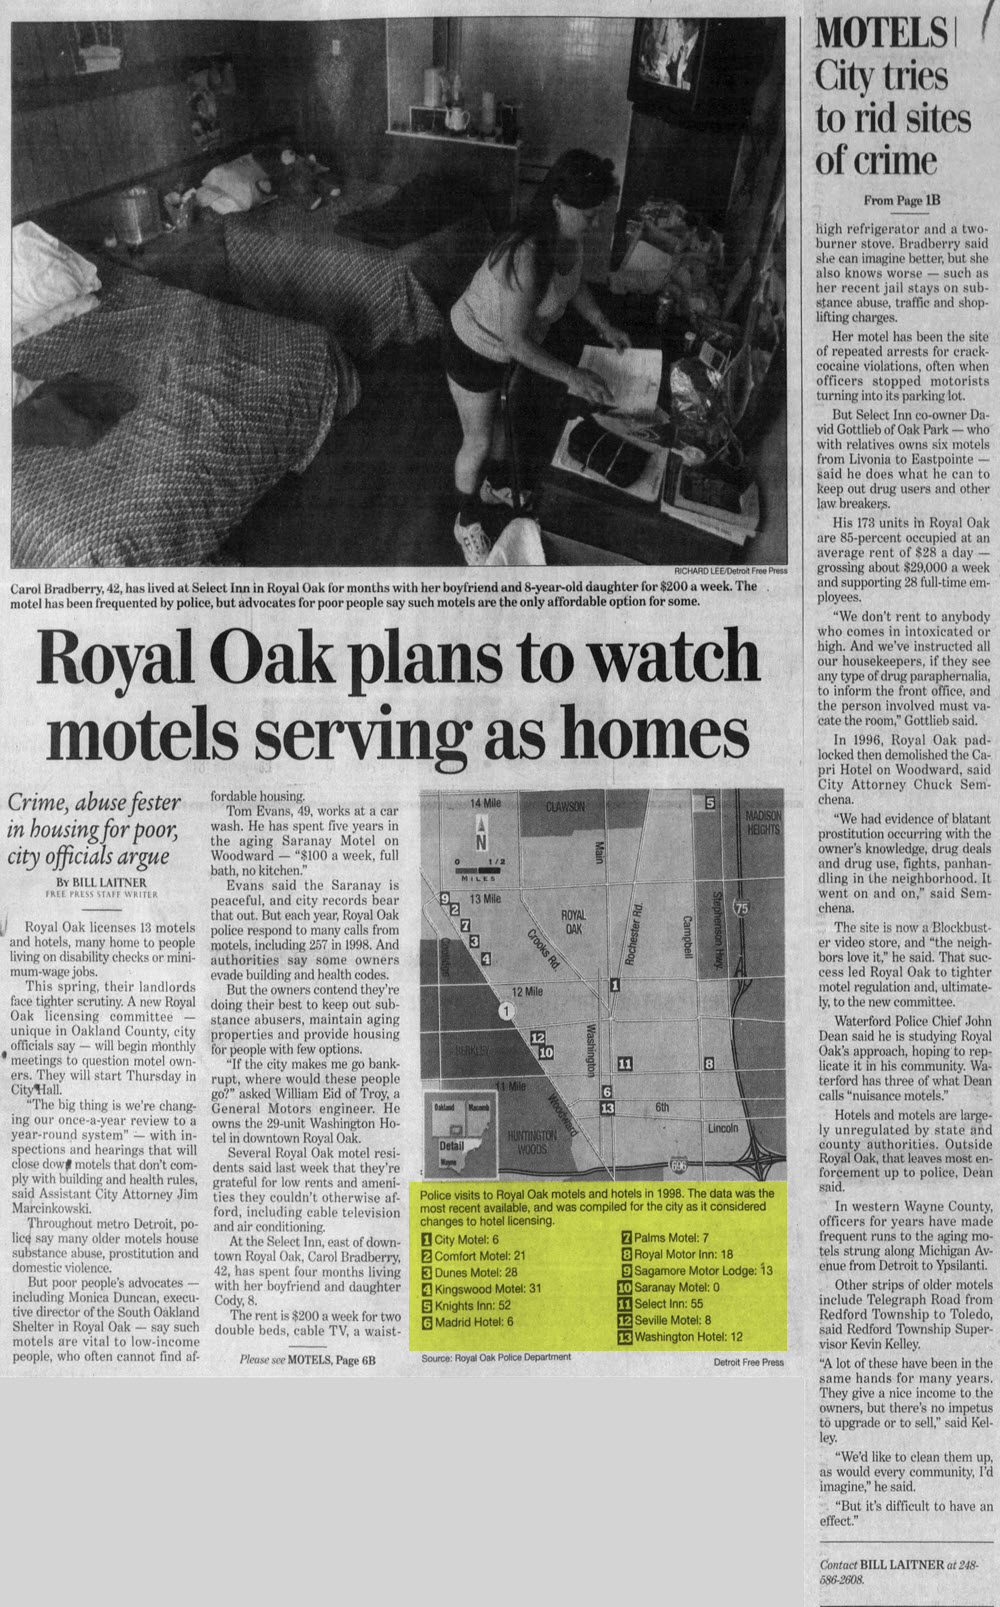 Royal Inn (Baymont, American Inn) - June 2000 Article On Motel Situation